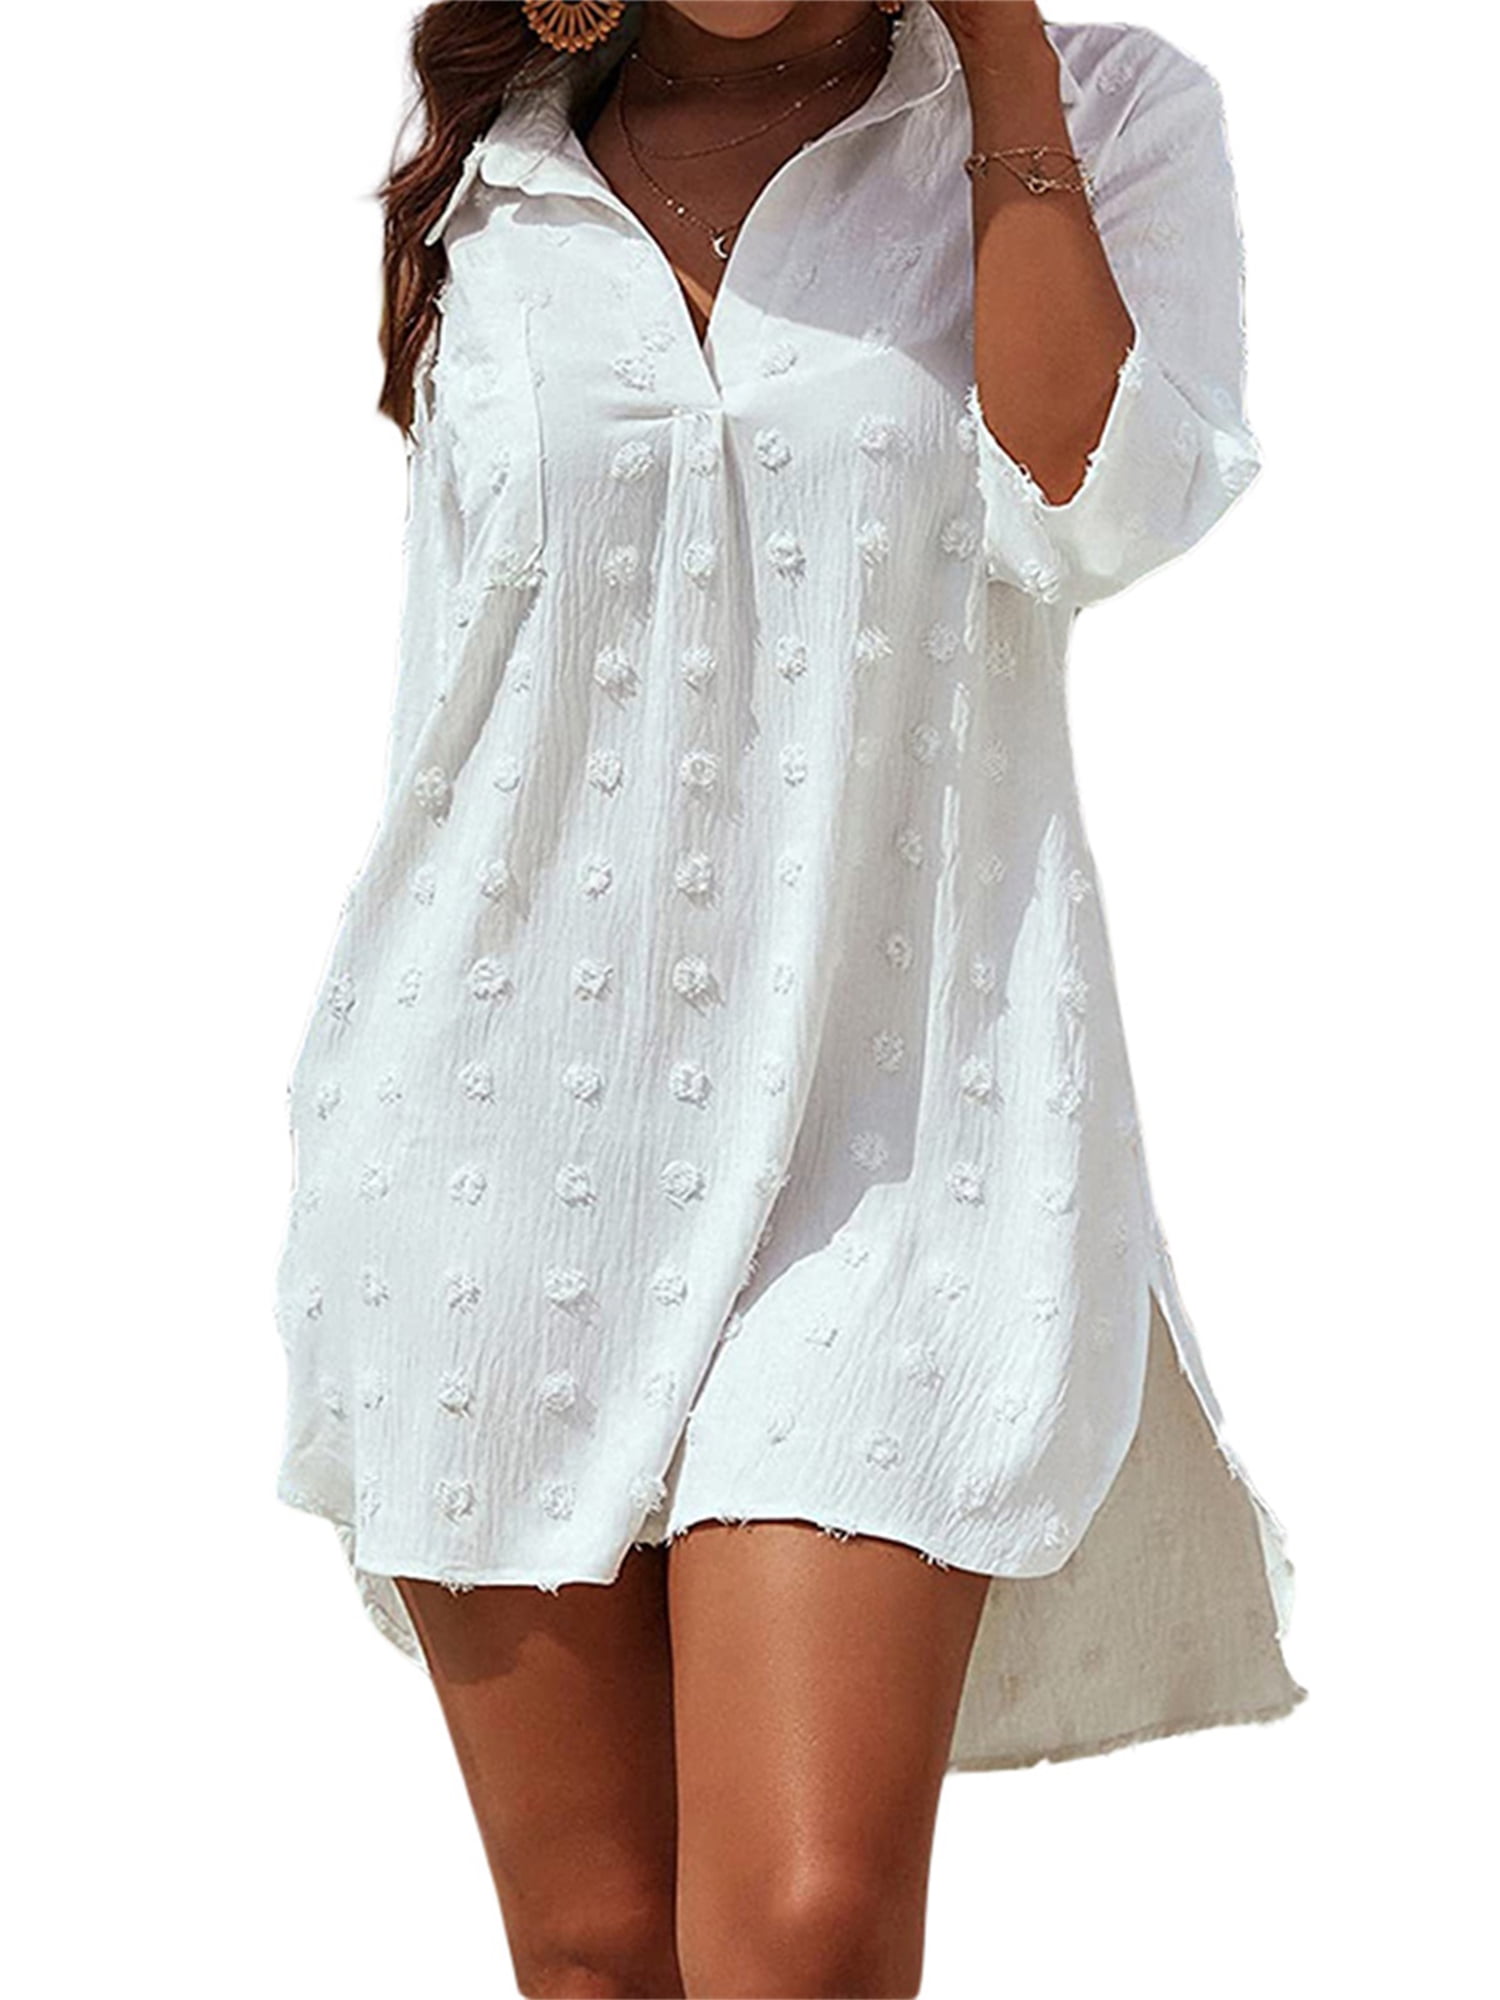 Bsubseach Women White Long Sleeve V Neck Loose Swimsuit Cover Up Swimwear Beach Tunic Dress